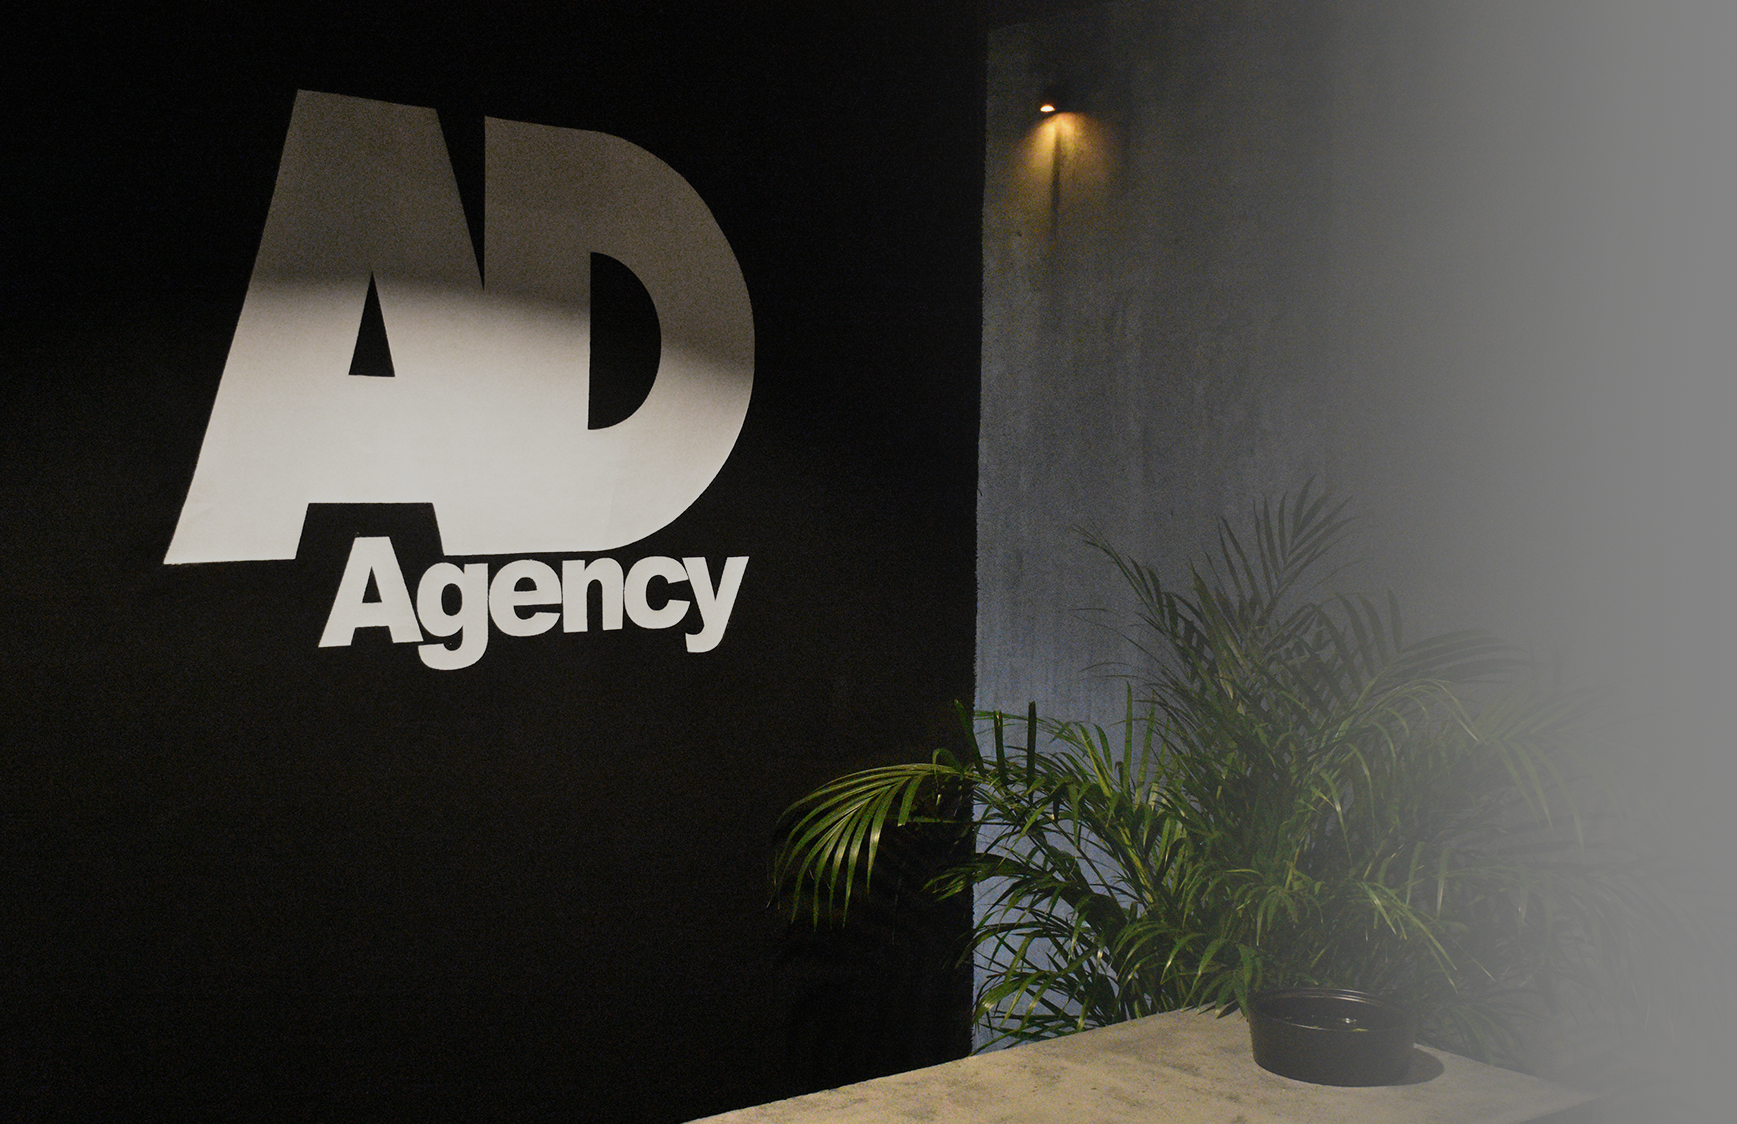 AD Agency dubai - ashtel design agency dubai